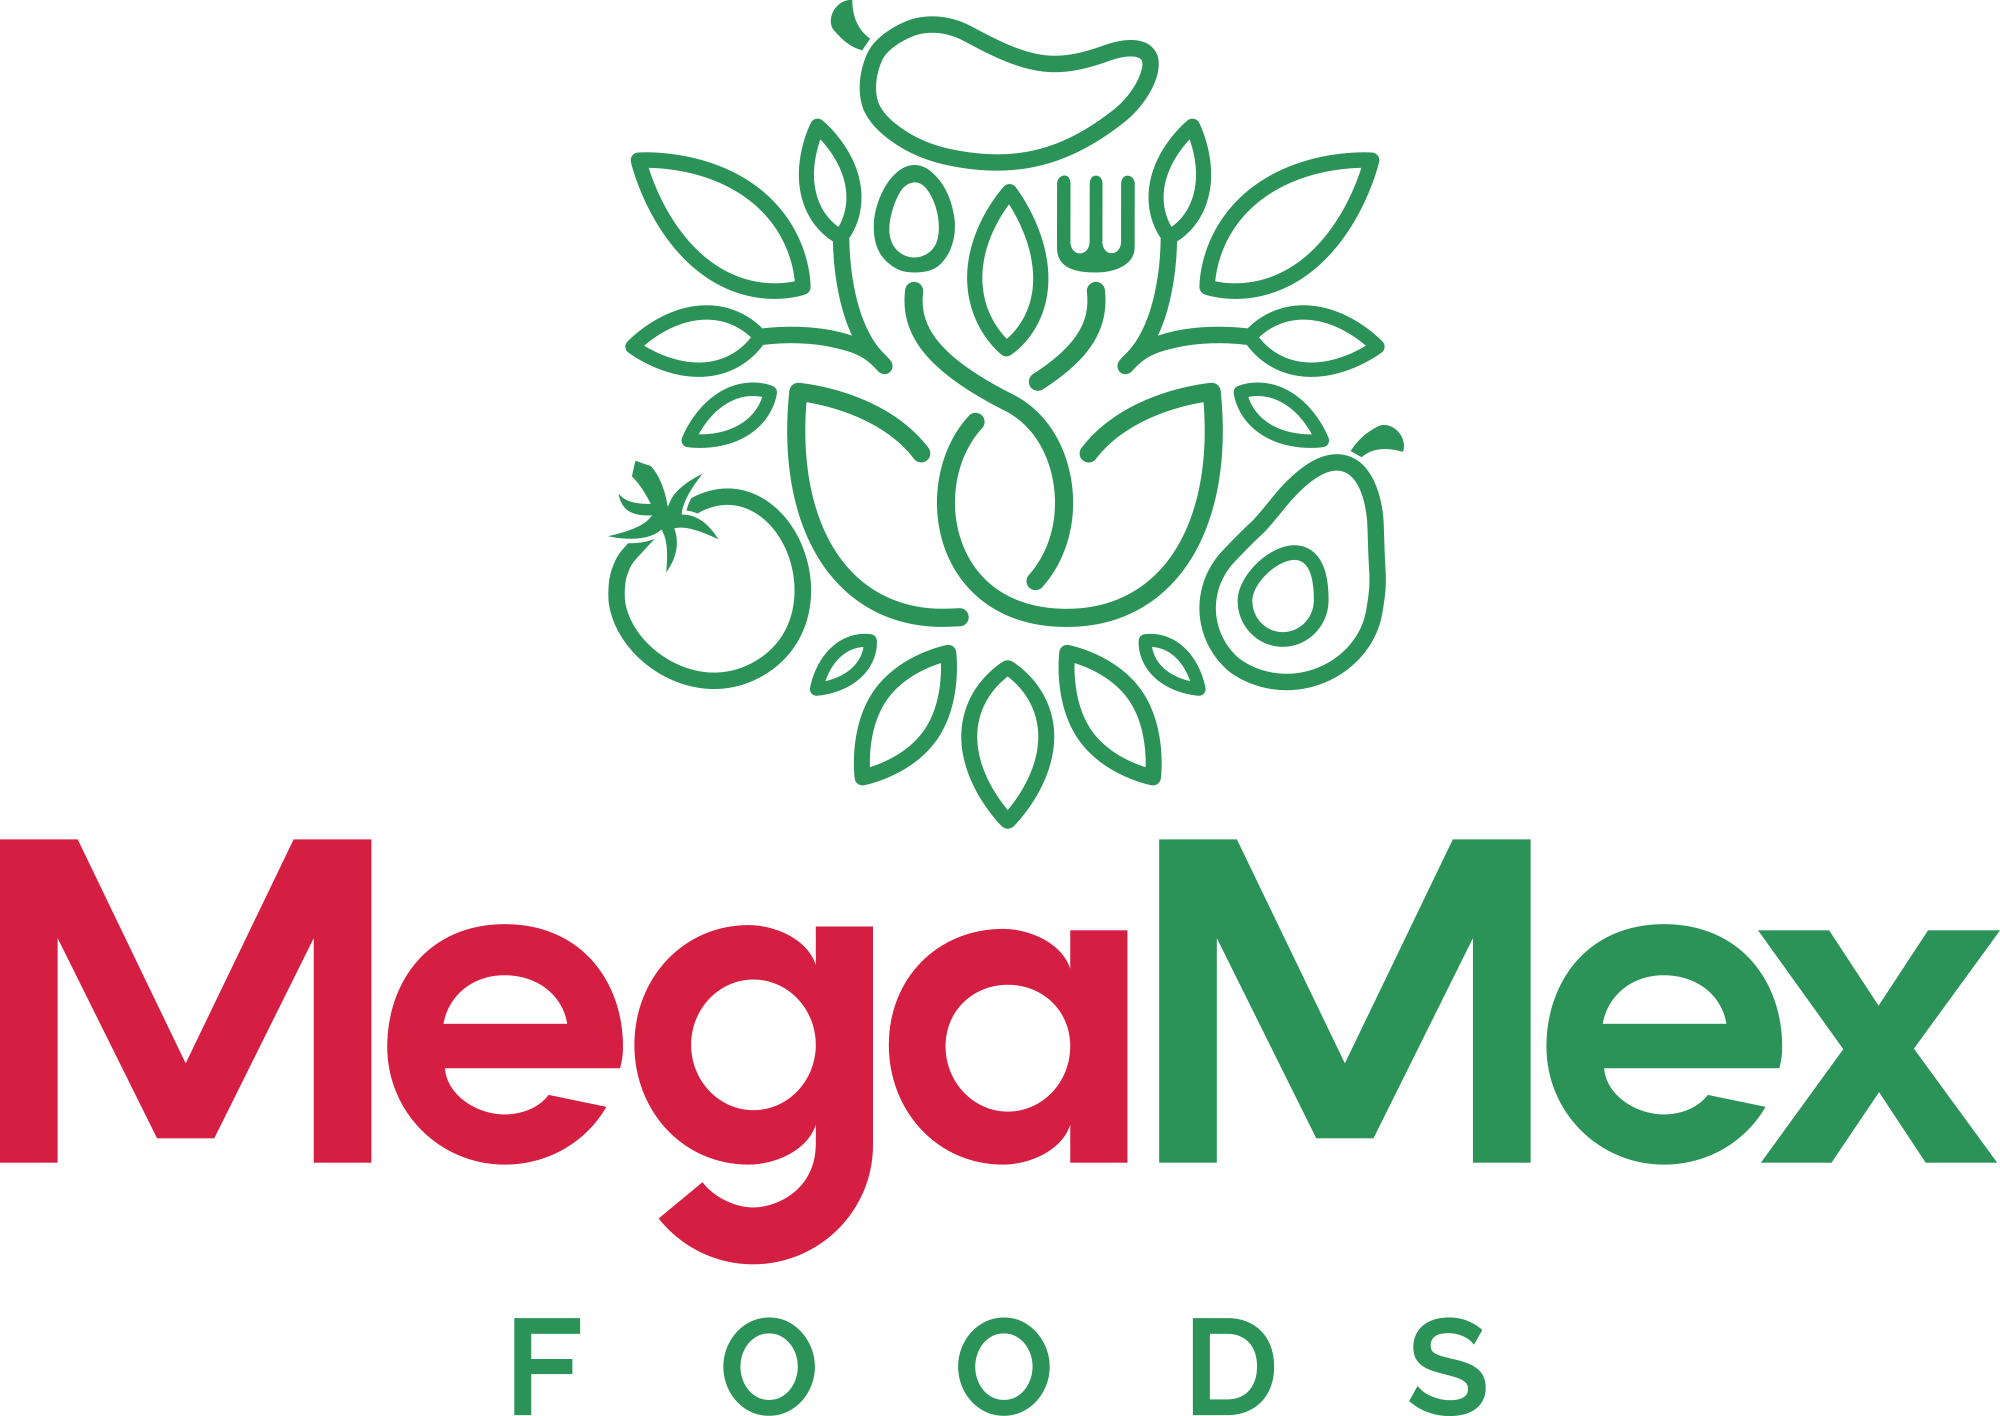 MegaMex Foods logo